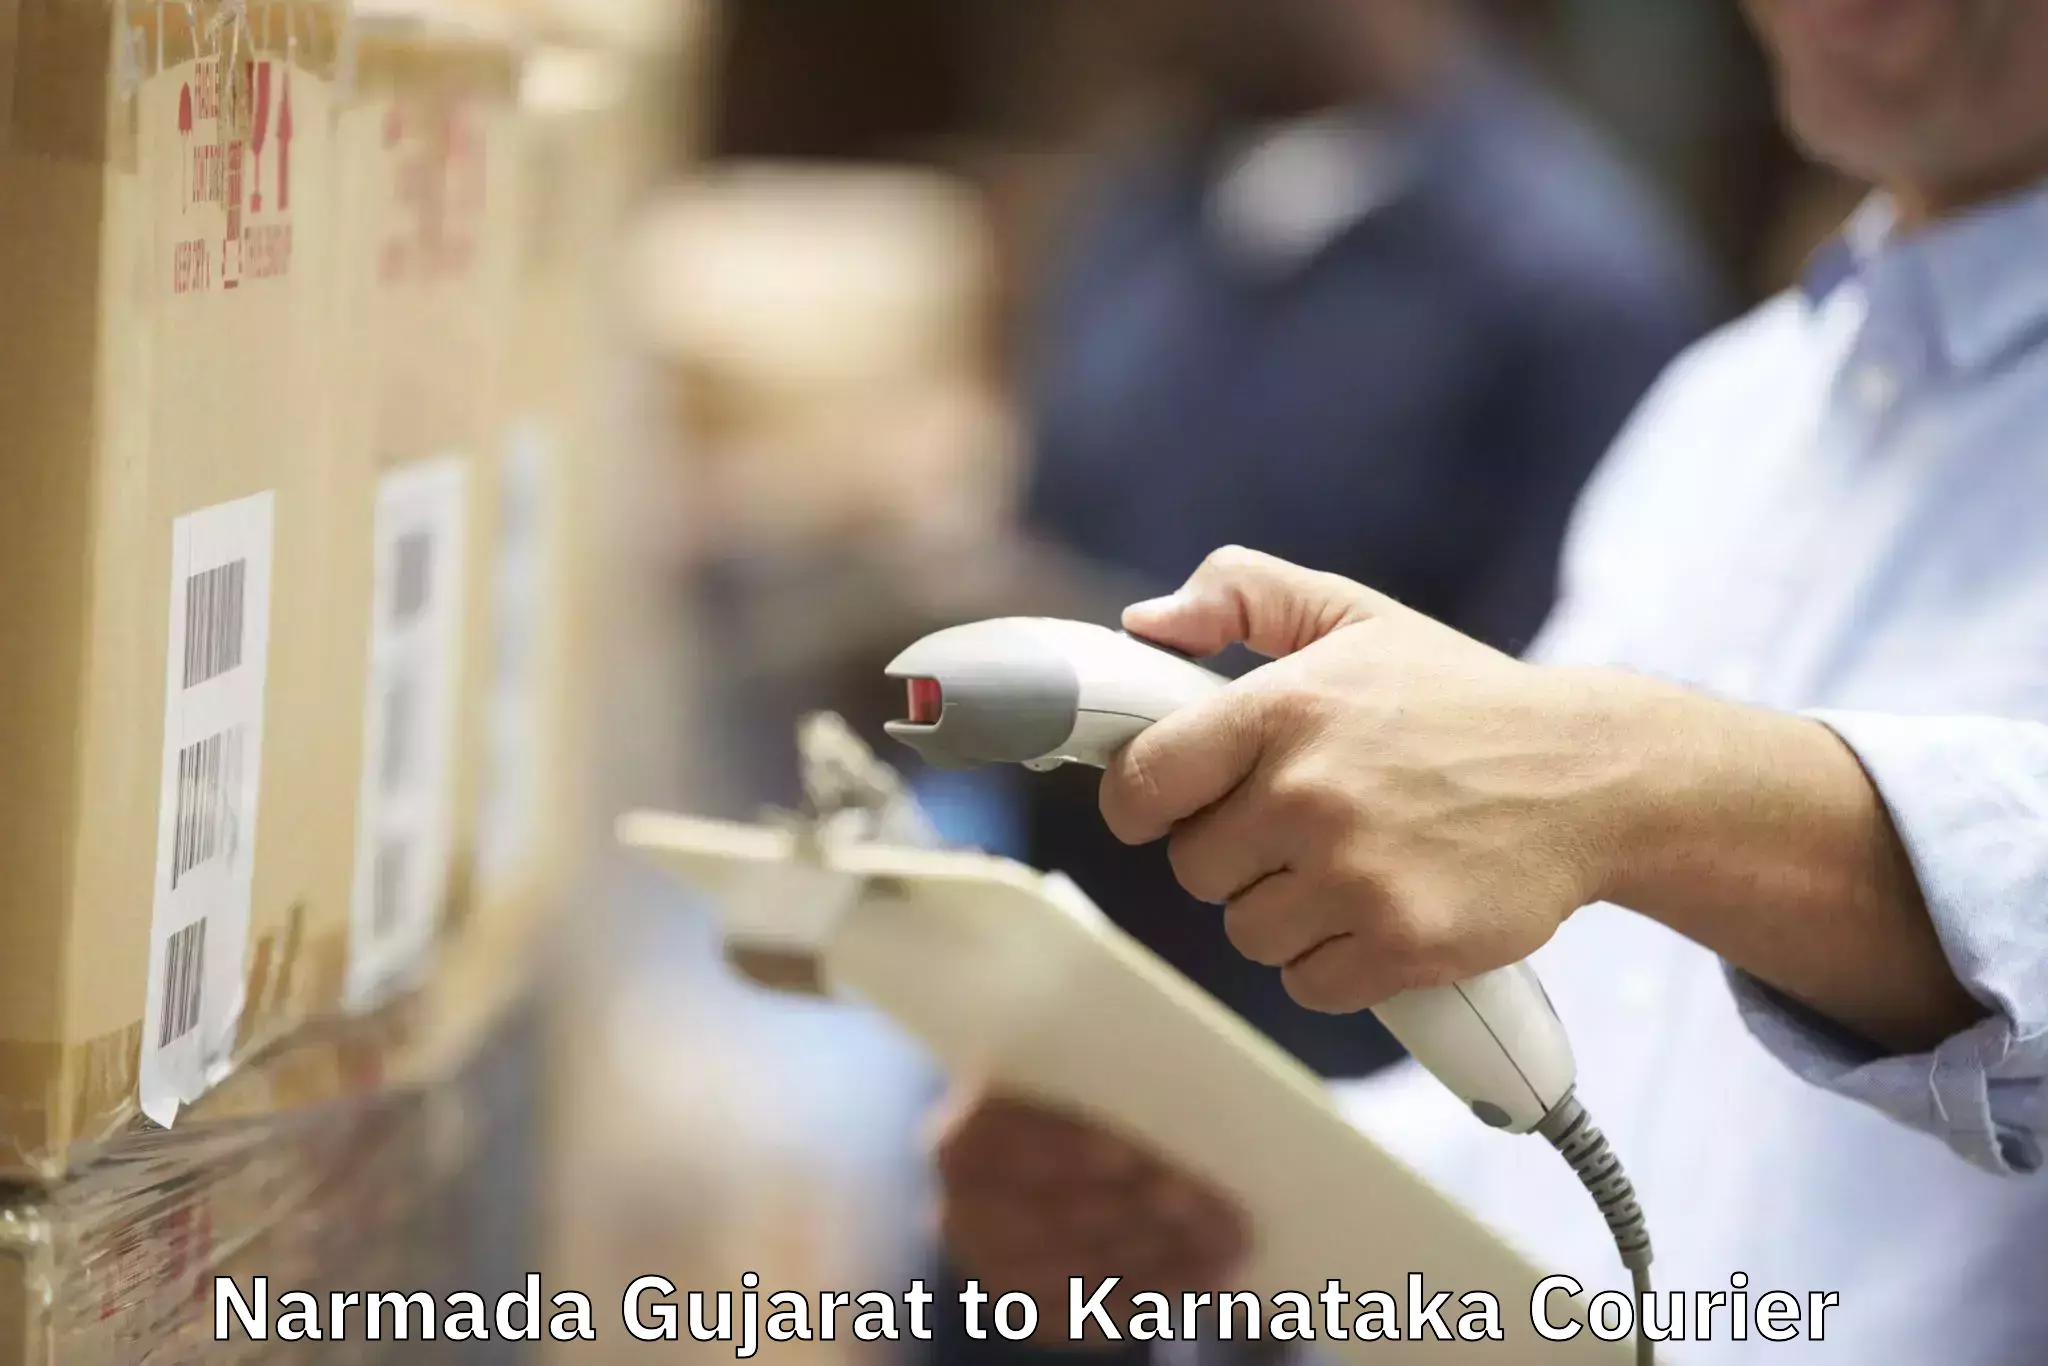 Moving service excellence Narmada Gujarat to Karnataka